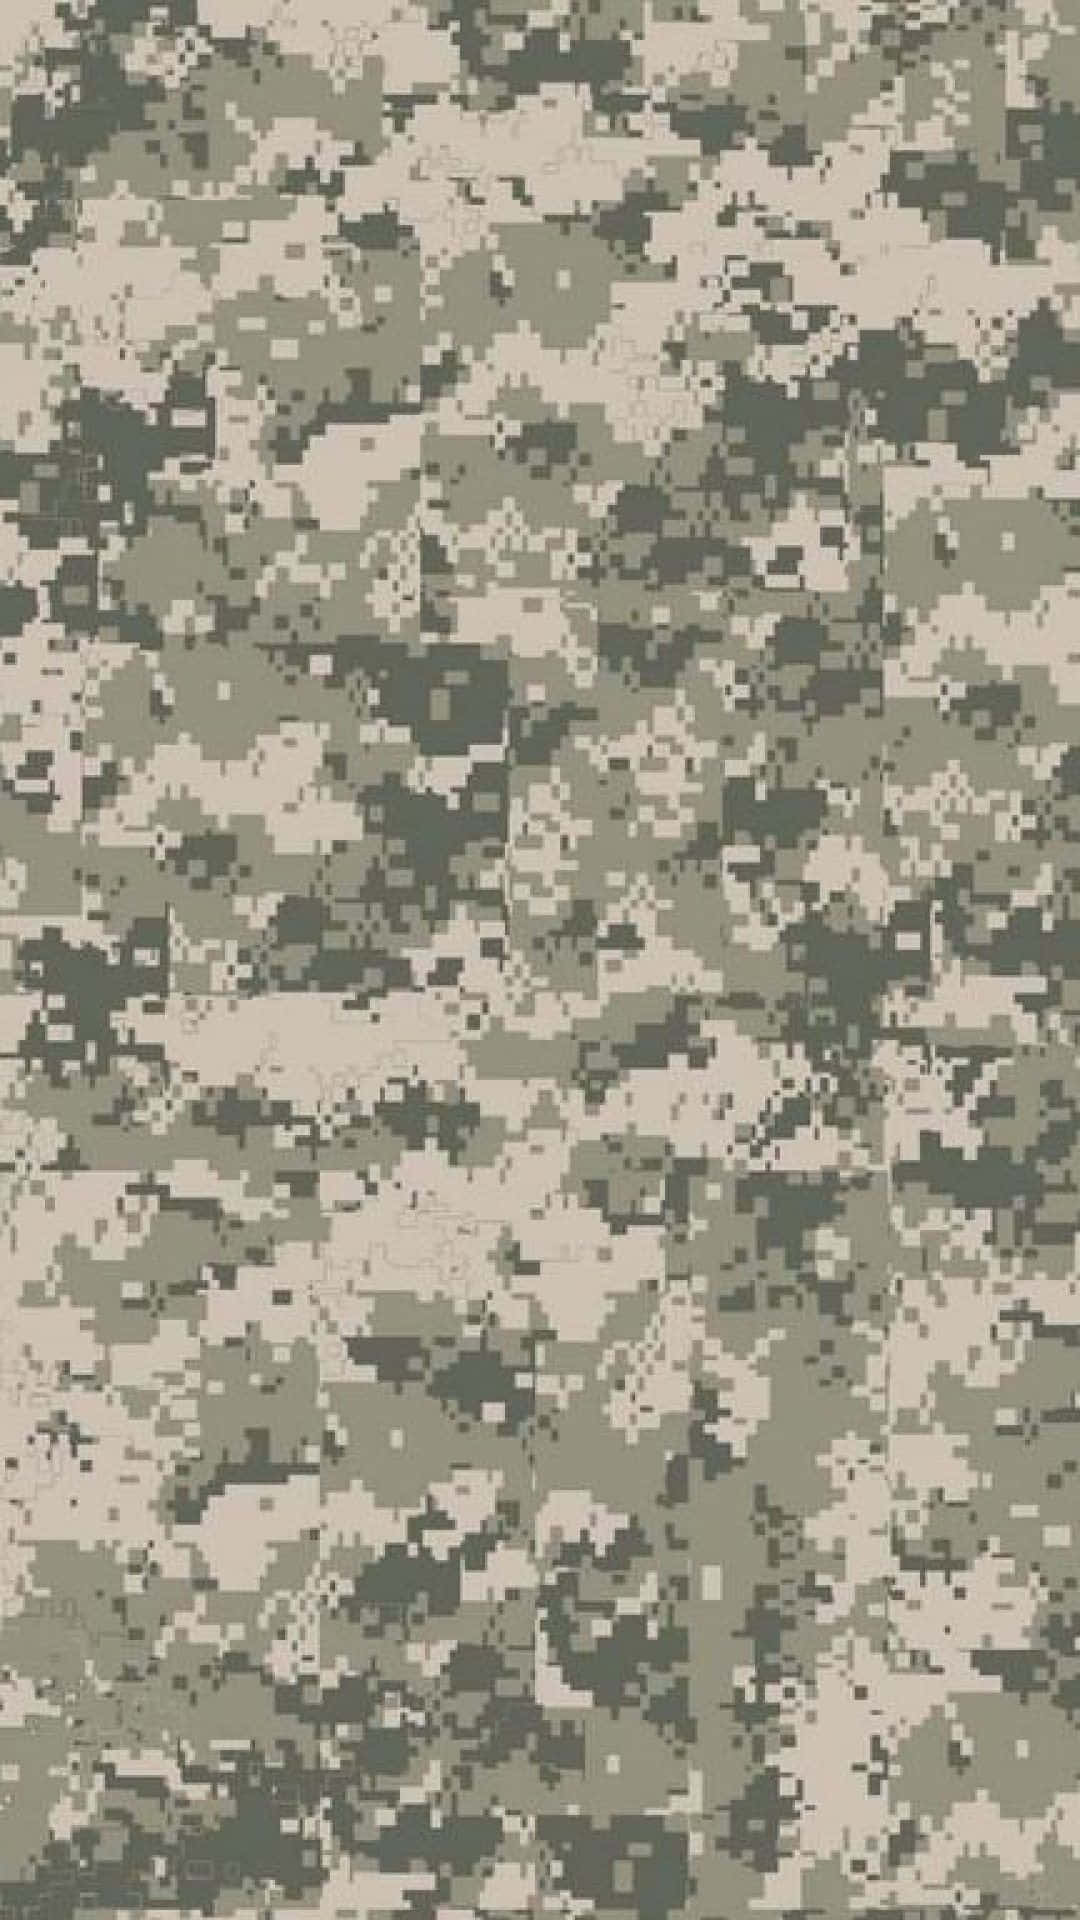 Caption: Unique Military Camouflage Pattern